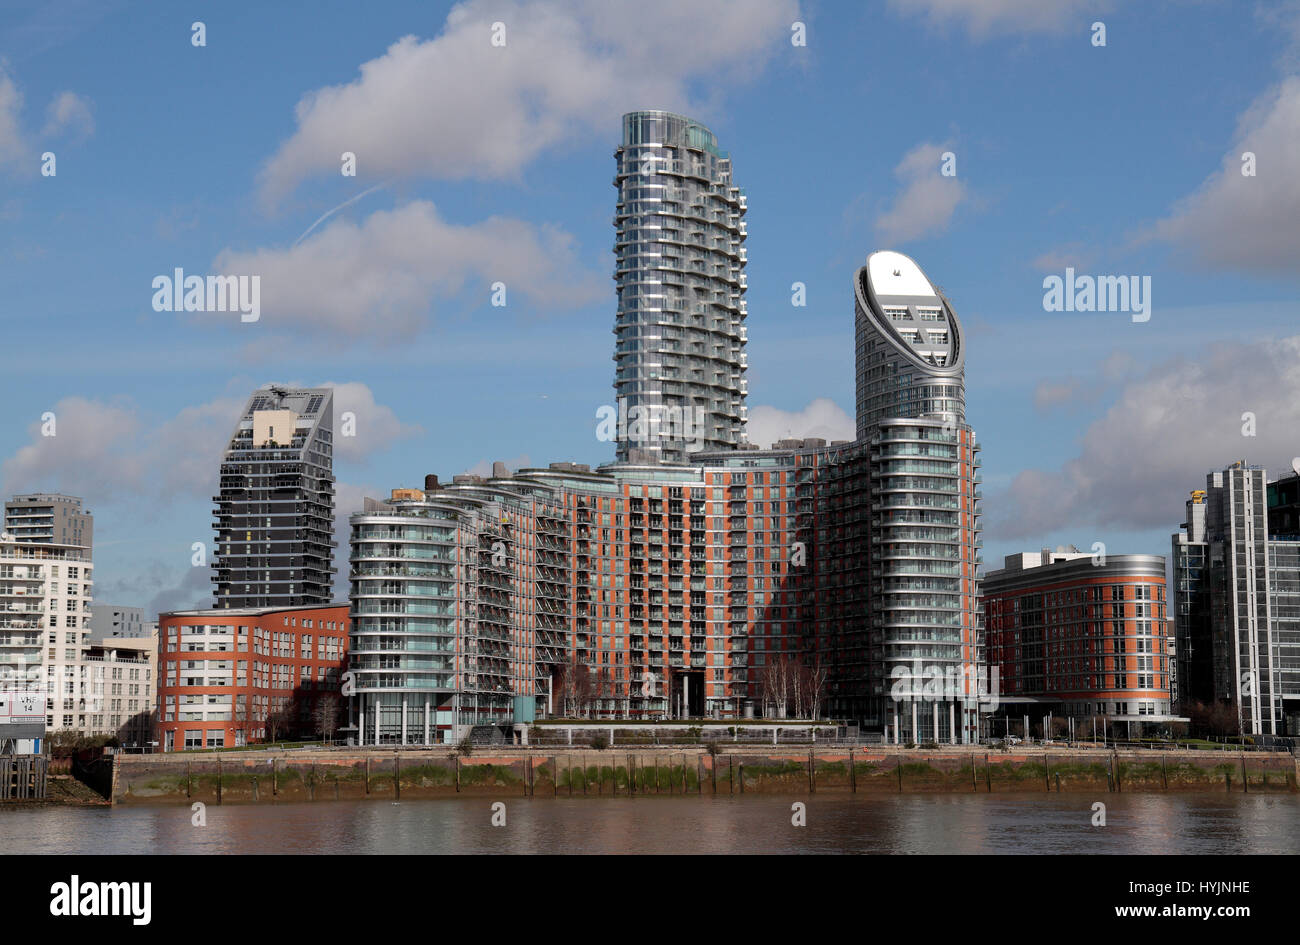 Blick auf New Providence Wharf am nördlichen Ufer der Themse in London Docklands, UK. Stockfoto